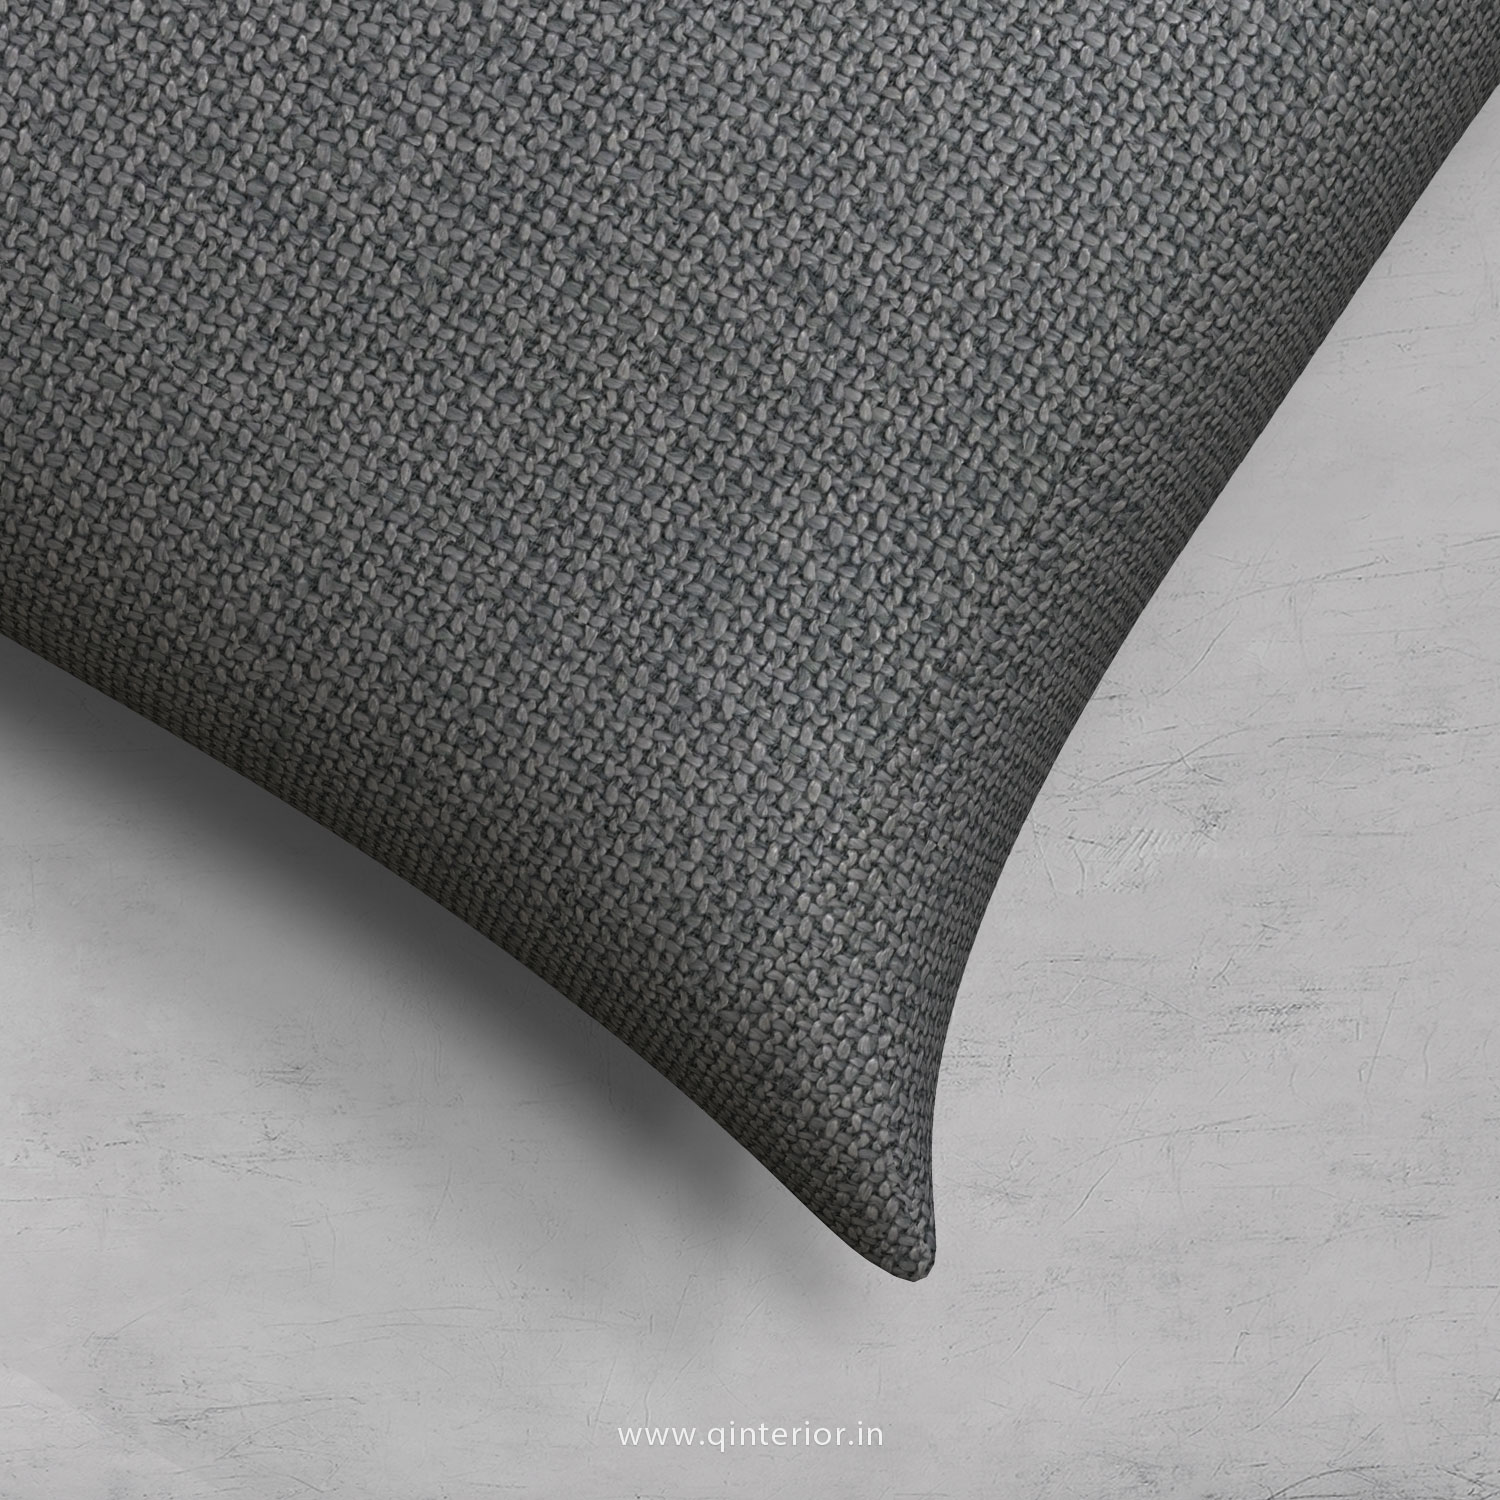 Cushion With Cushion Cover in Marvello- CUS001 MV03